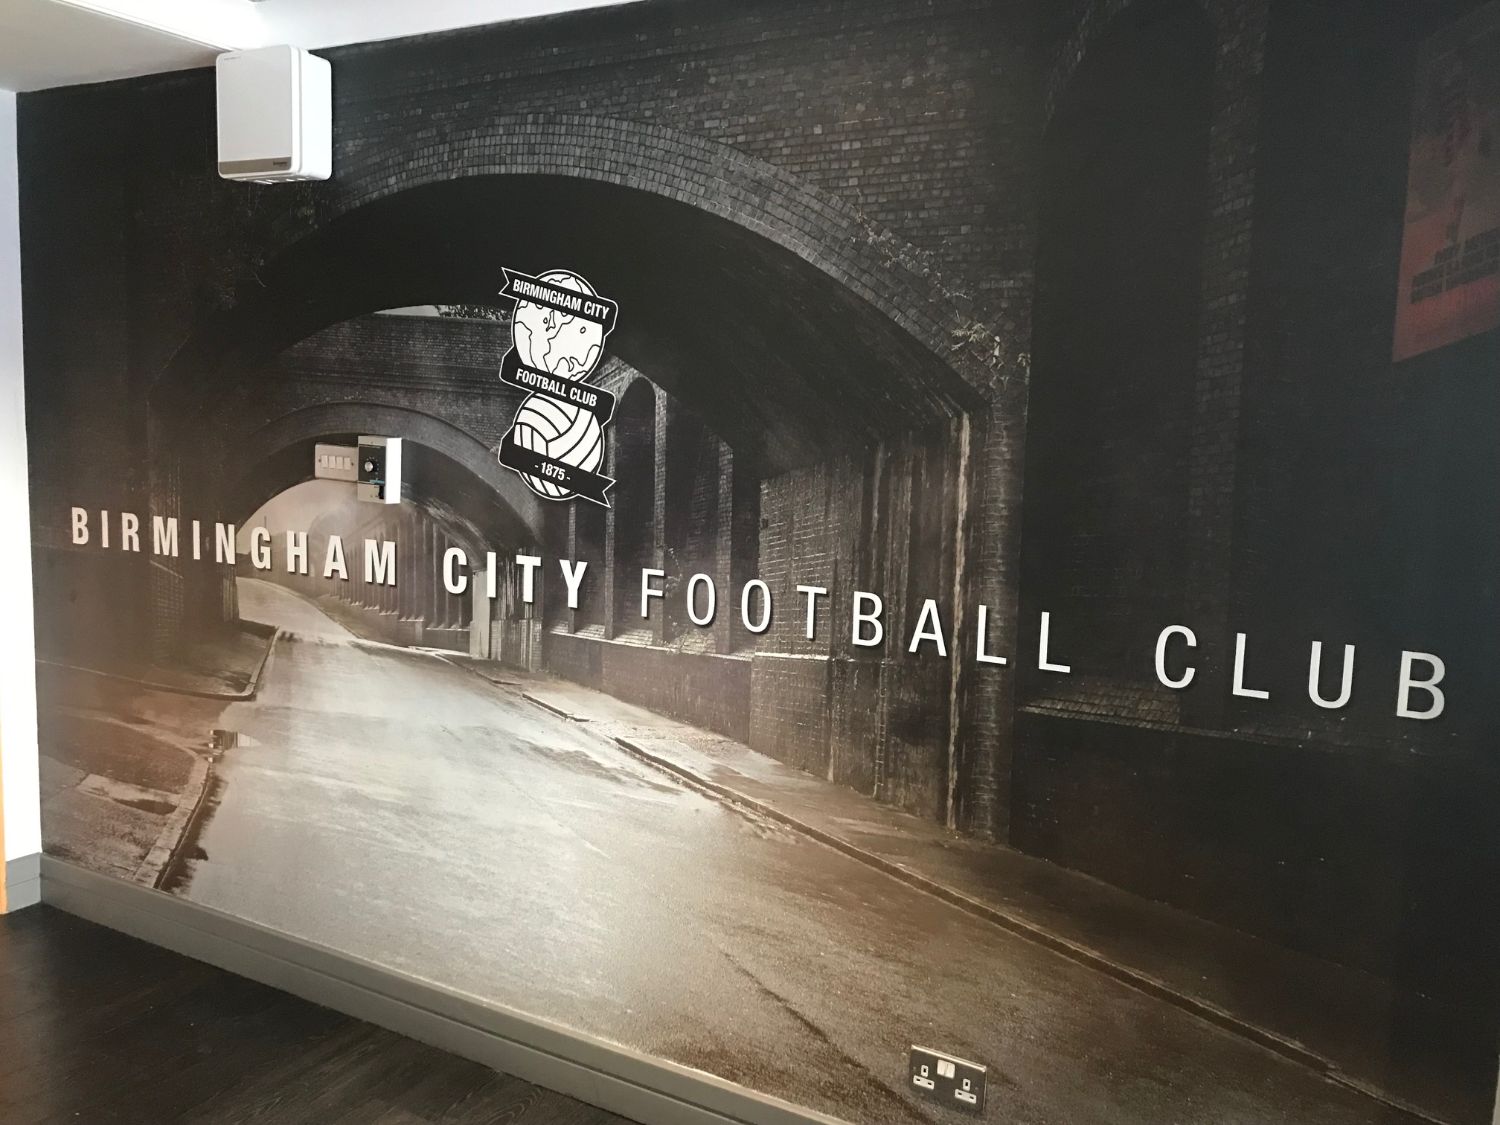 Birmingham city football club wall mural for office branding.